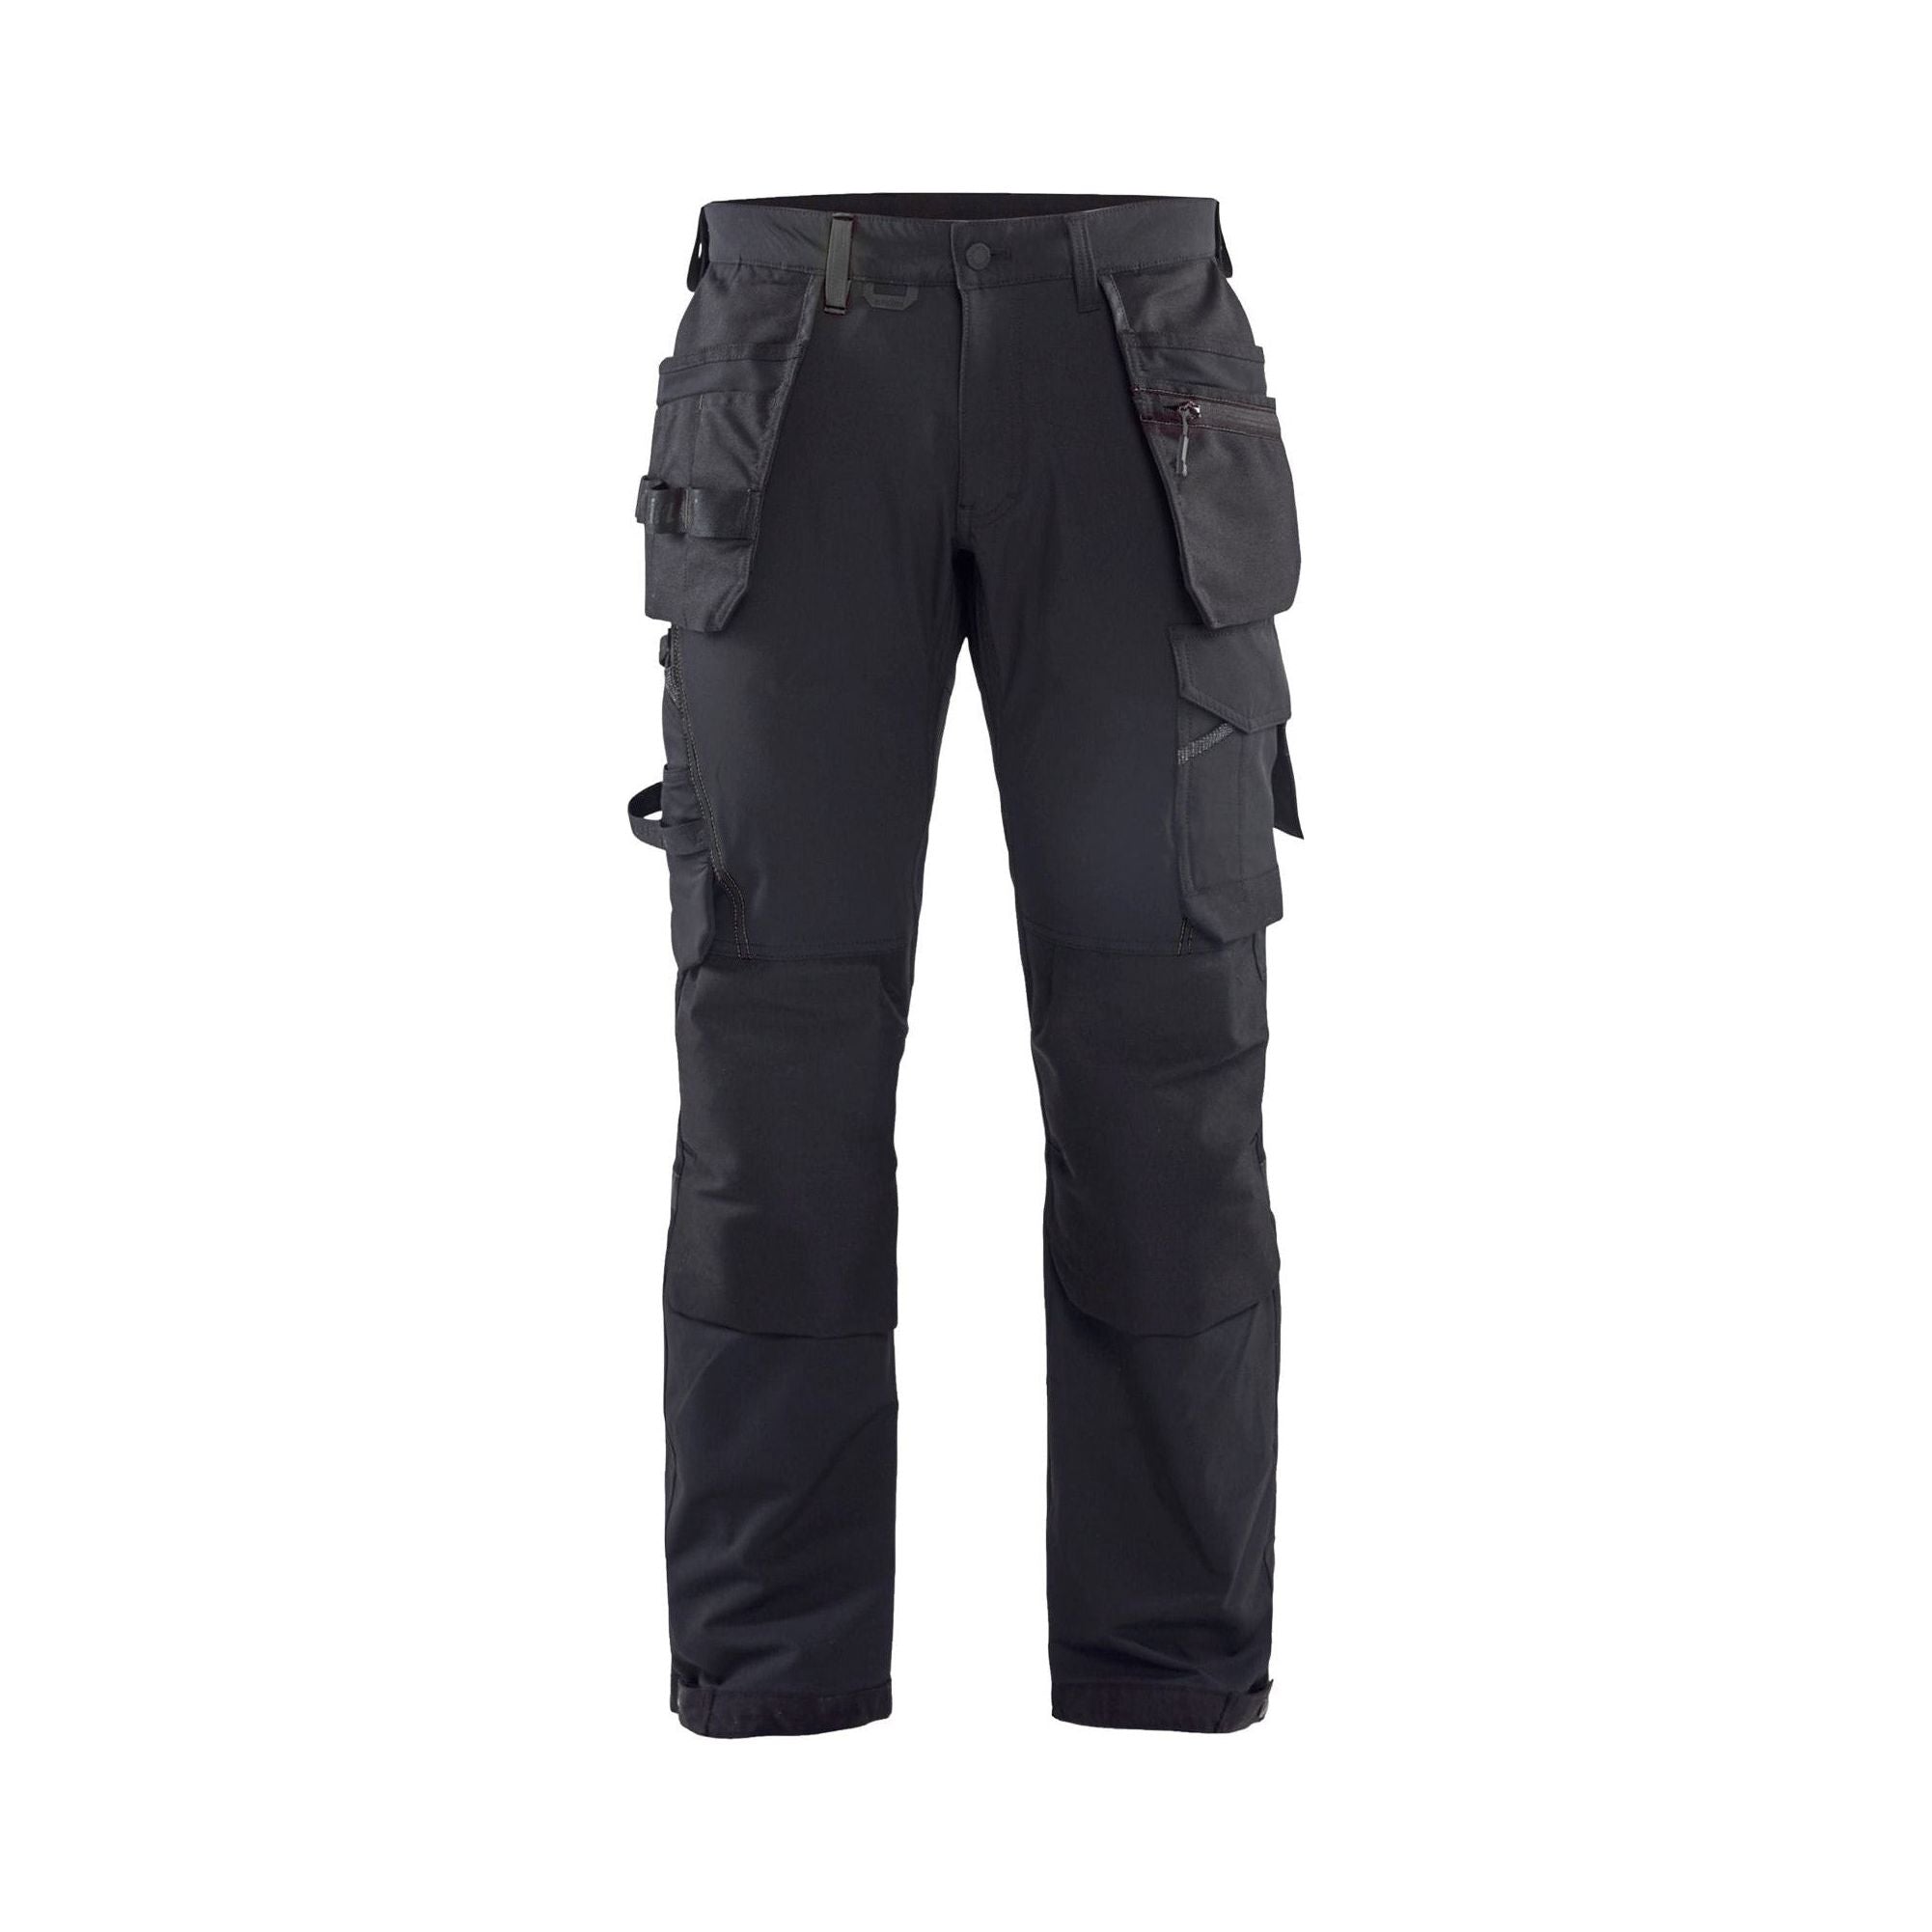 Blaklader 1522 Craftsman Trousers 4-Way Stretch Black/Grey